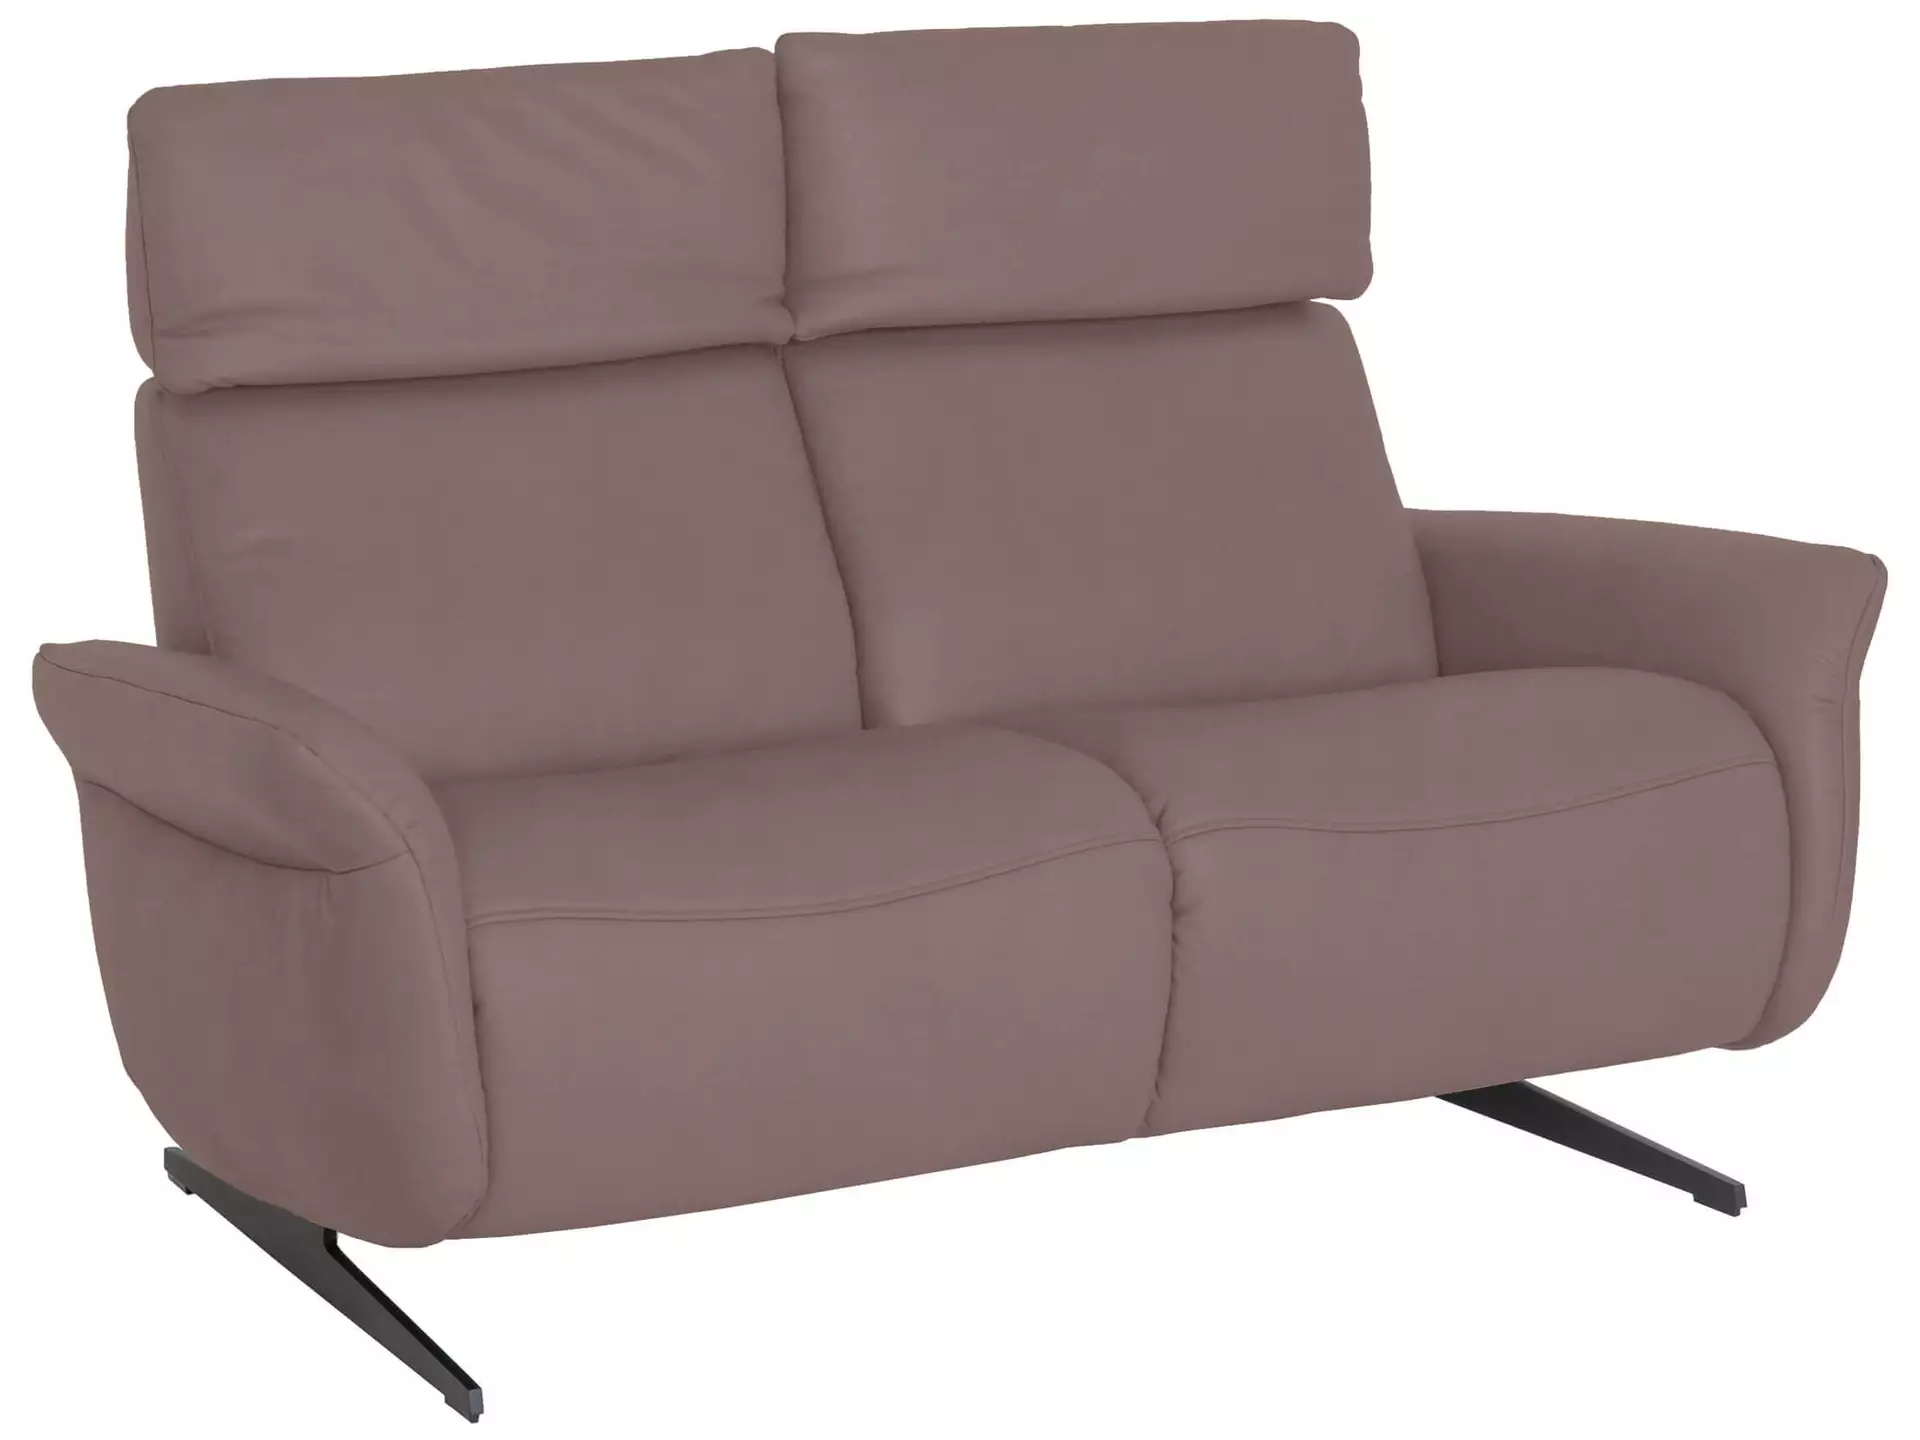 Sofa Patricia Basic B: 149 cm Himolla / Farbe: Schiefer / Material: Stoff Basic